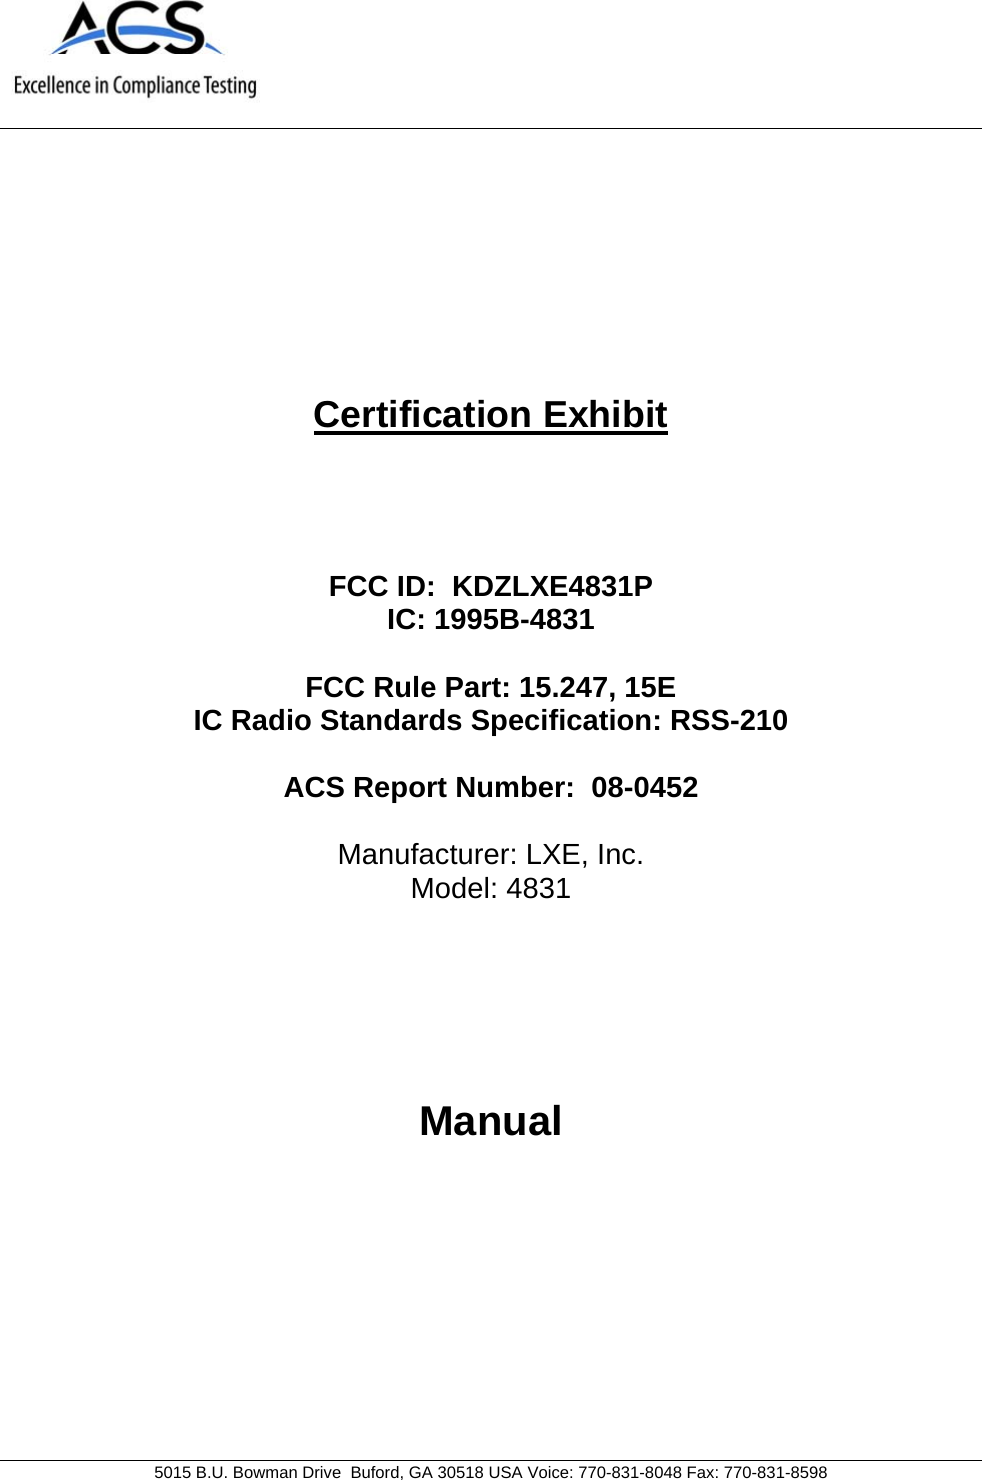         5015 B.U. Bowman Drive  Buford, GA 30518 USA Voice: 770-831-8048 Fax: 770-831-8598 Certification Exhibit     FCC ID:  KDZLXE4831P IC: 1995B-4831  FCC Rule Part: 15.247, 15E IC Radio Standards Specification: RSS-210  ACS Report Number:  08-0452   Manufacturer: LXE, Inc. Model: 4831     Manual  